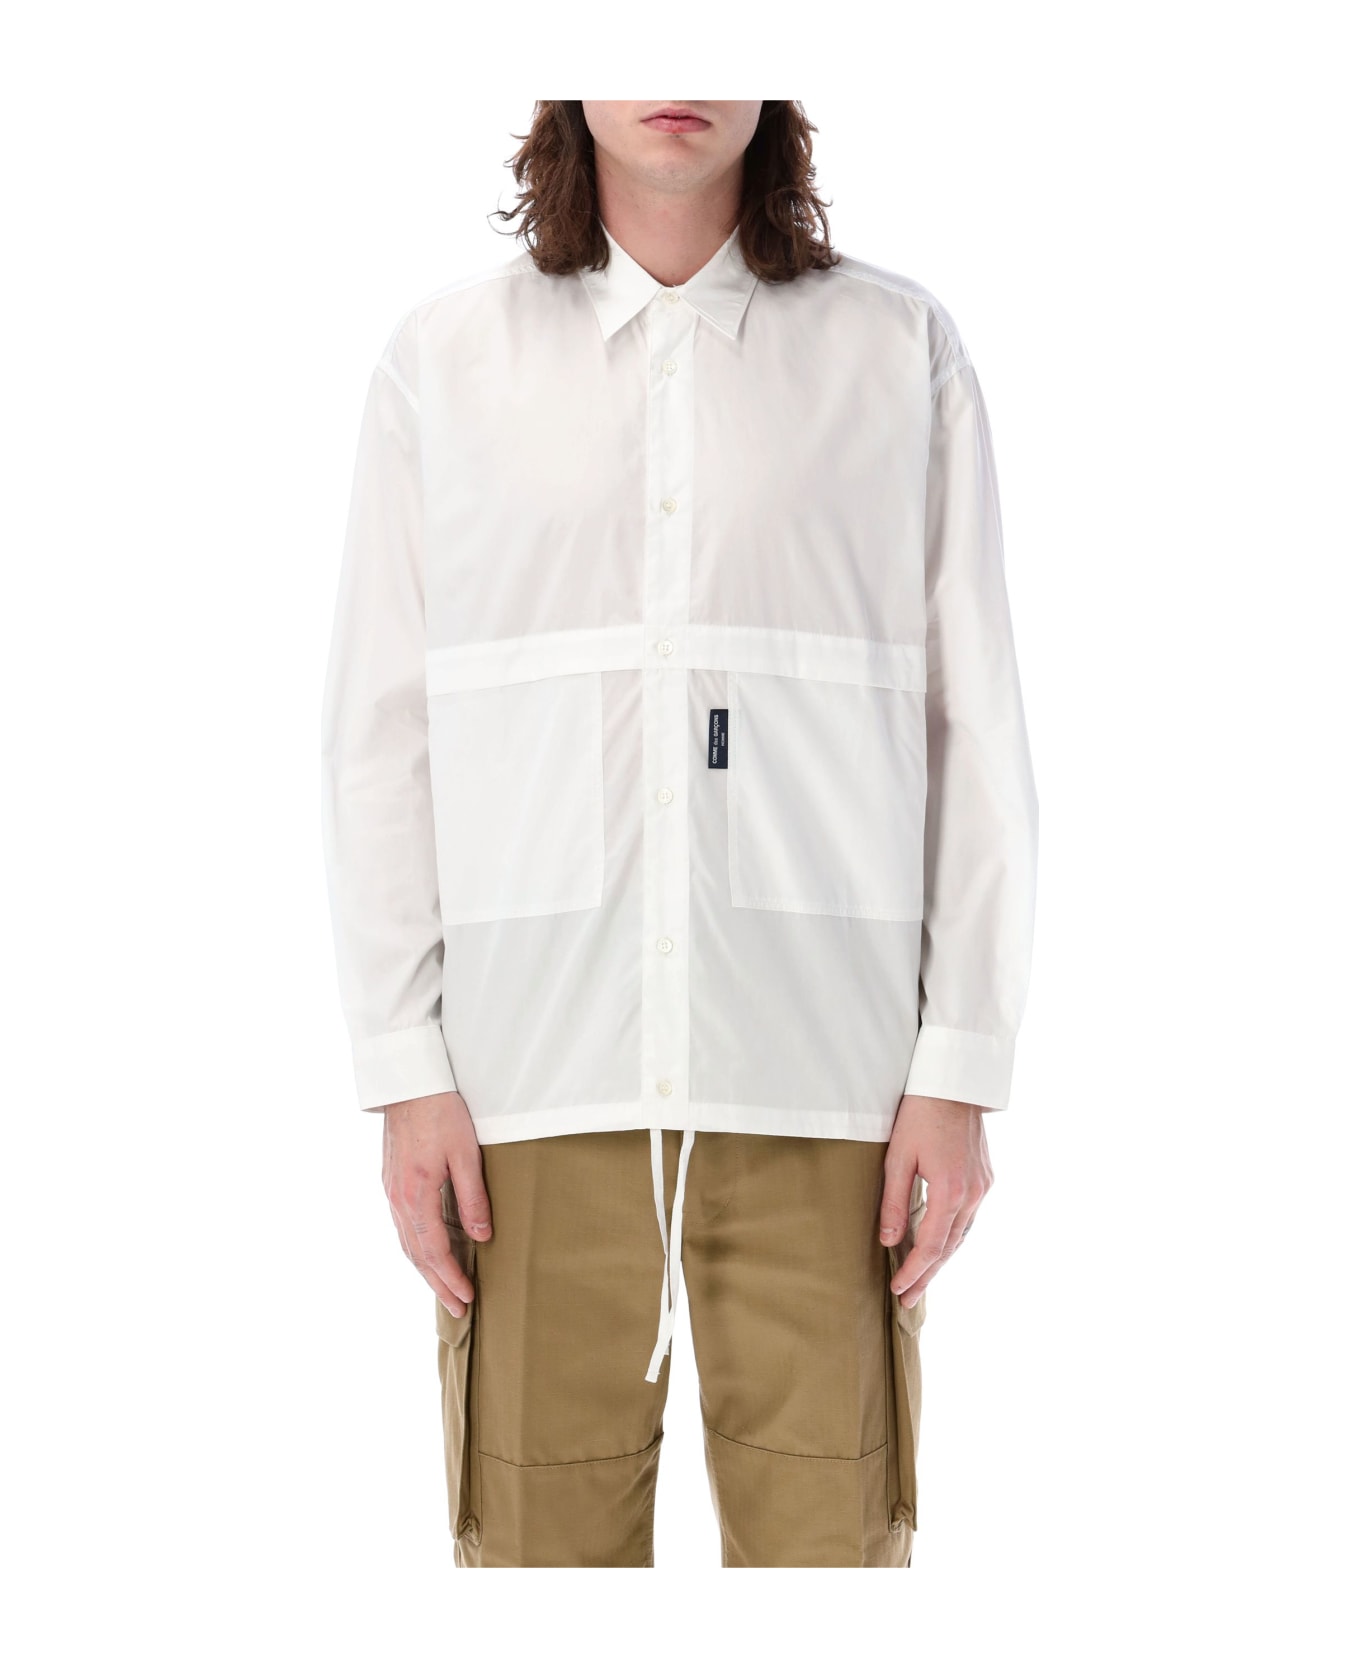 Comme des Garçons Homme Concealed Pockets Shirt - WHITE